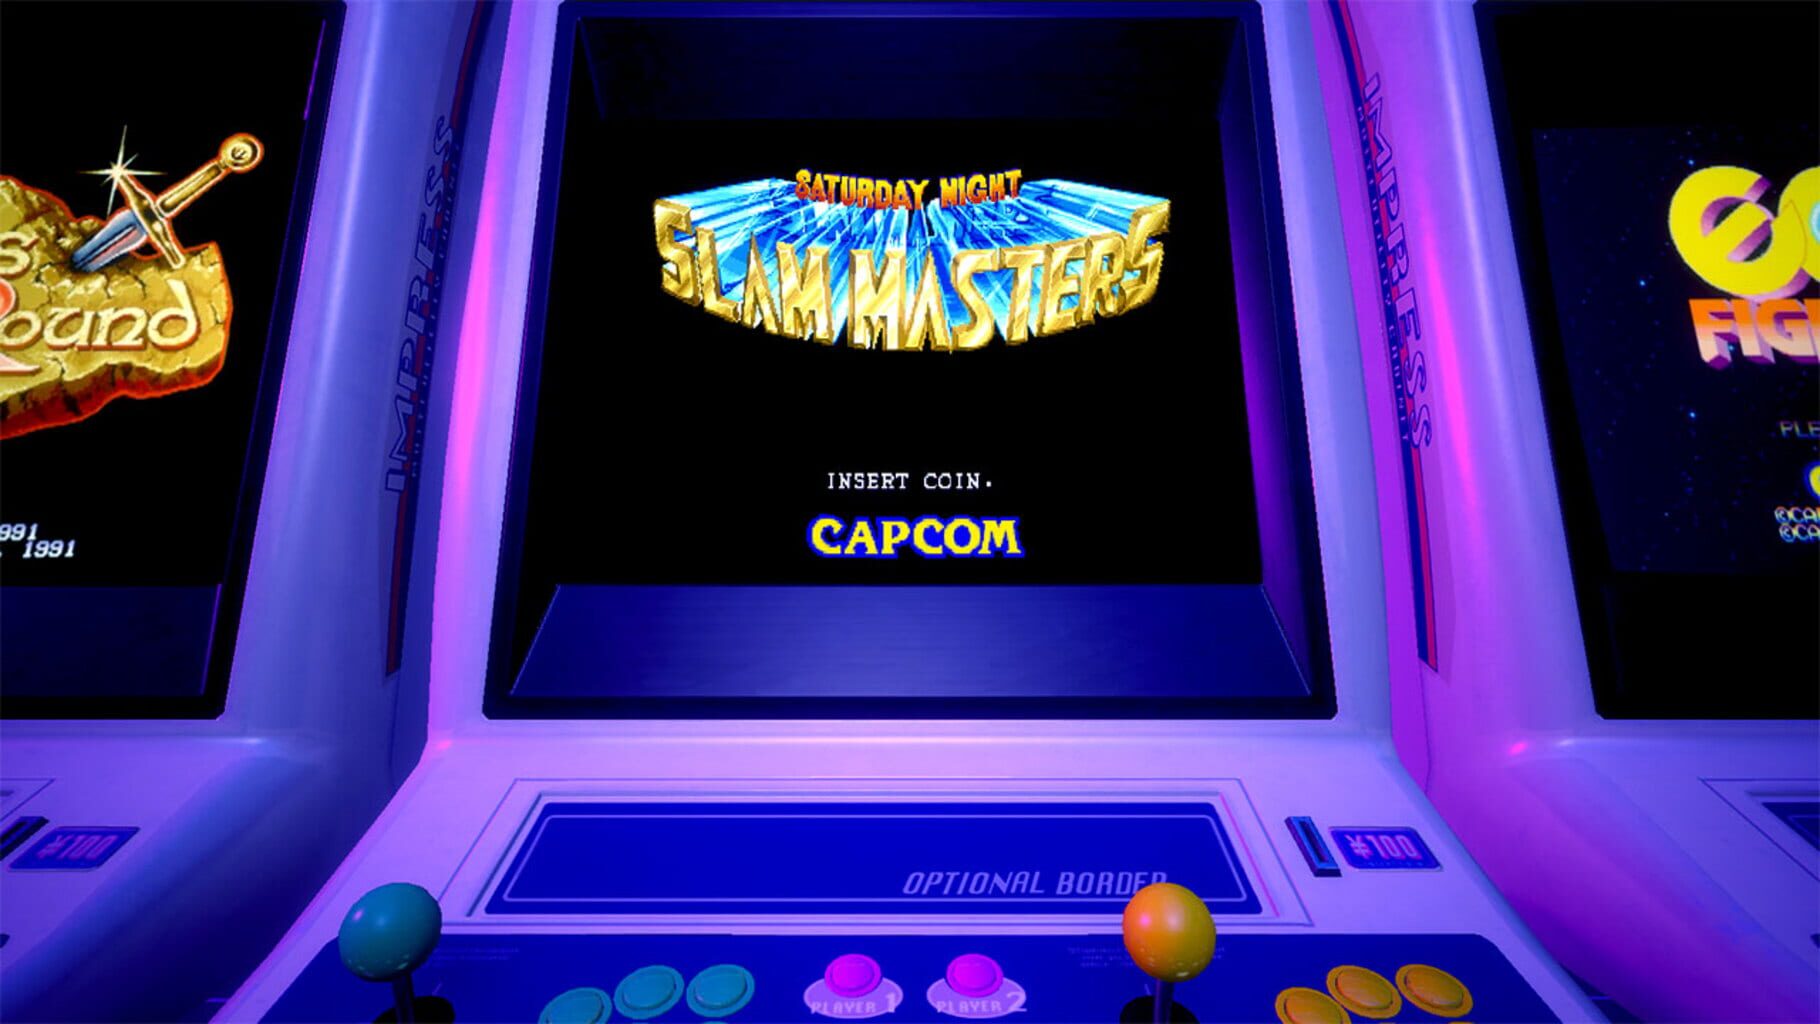 Capcom Arcade 2nd Stadium: Saturday Night Slam Masters screenshot